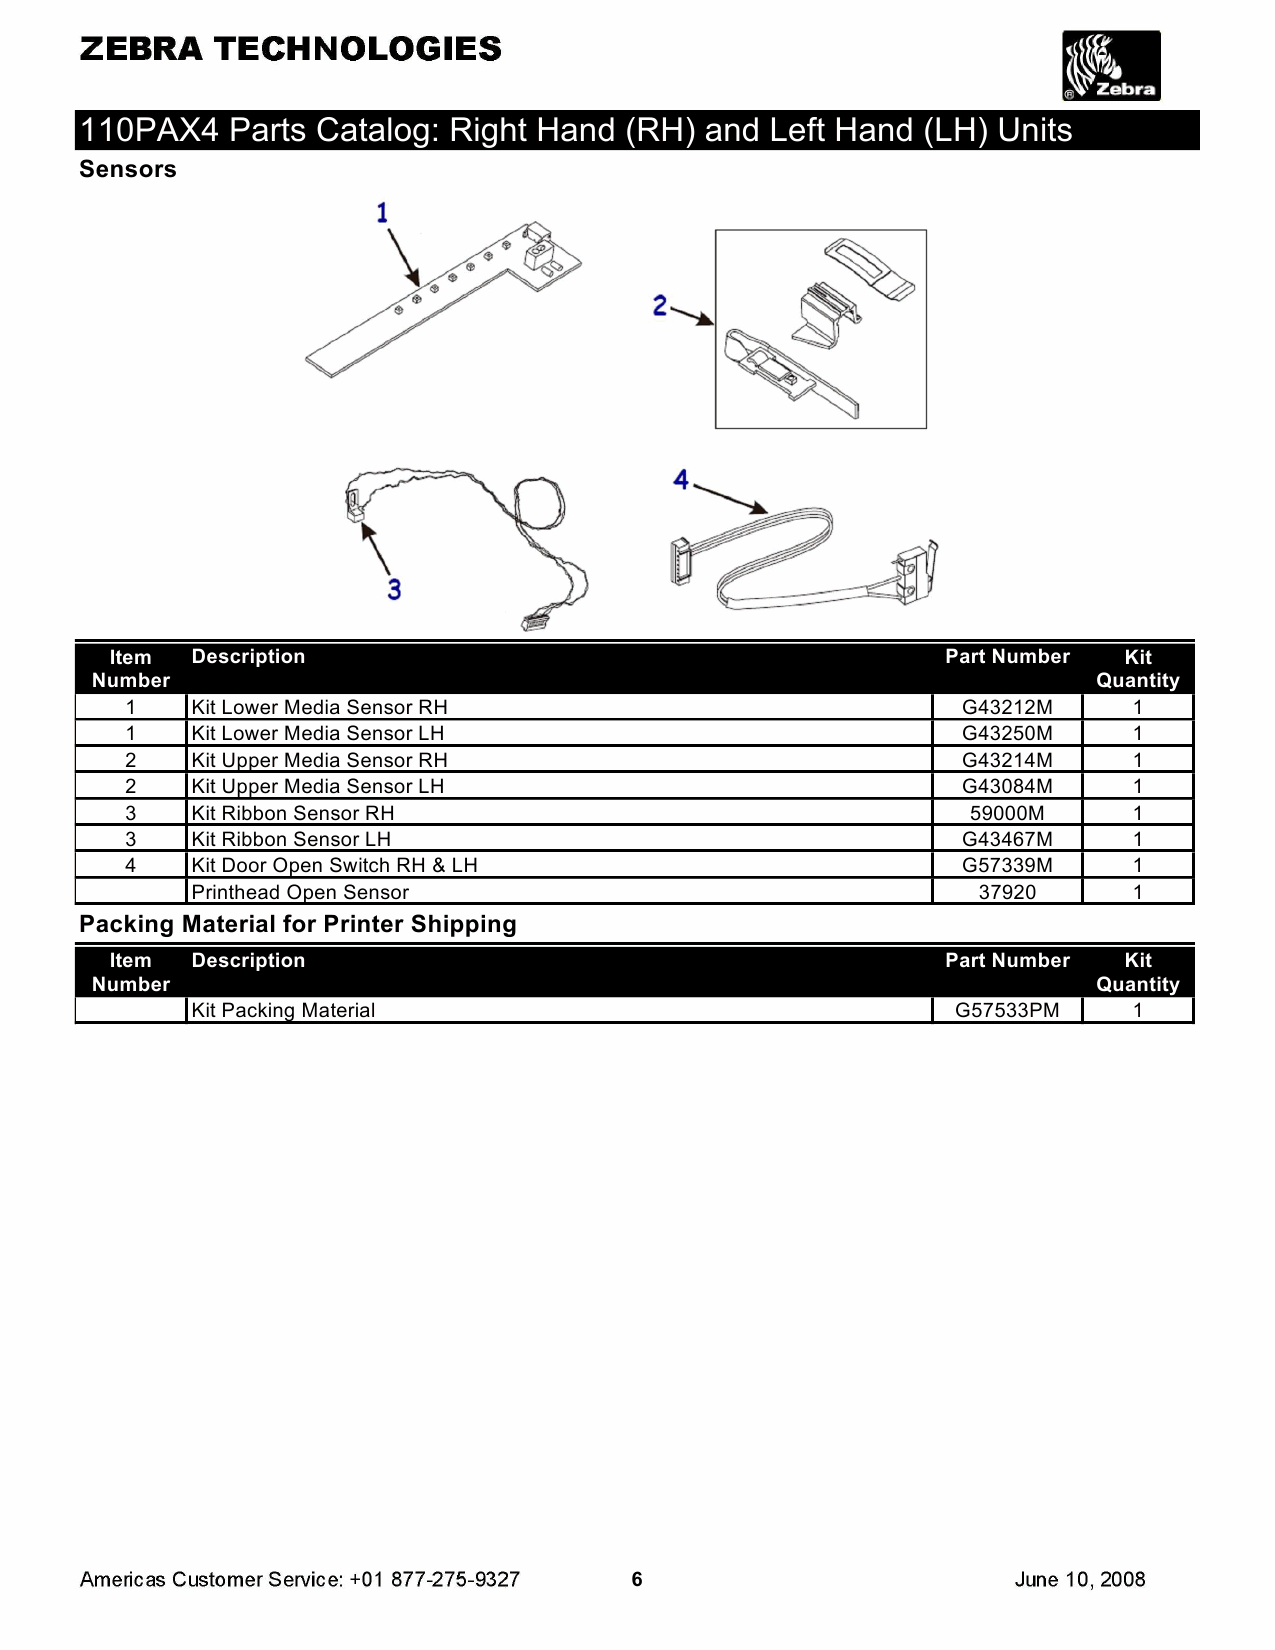 Zebra Label 110PAX4 Parts Catalog-5